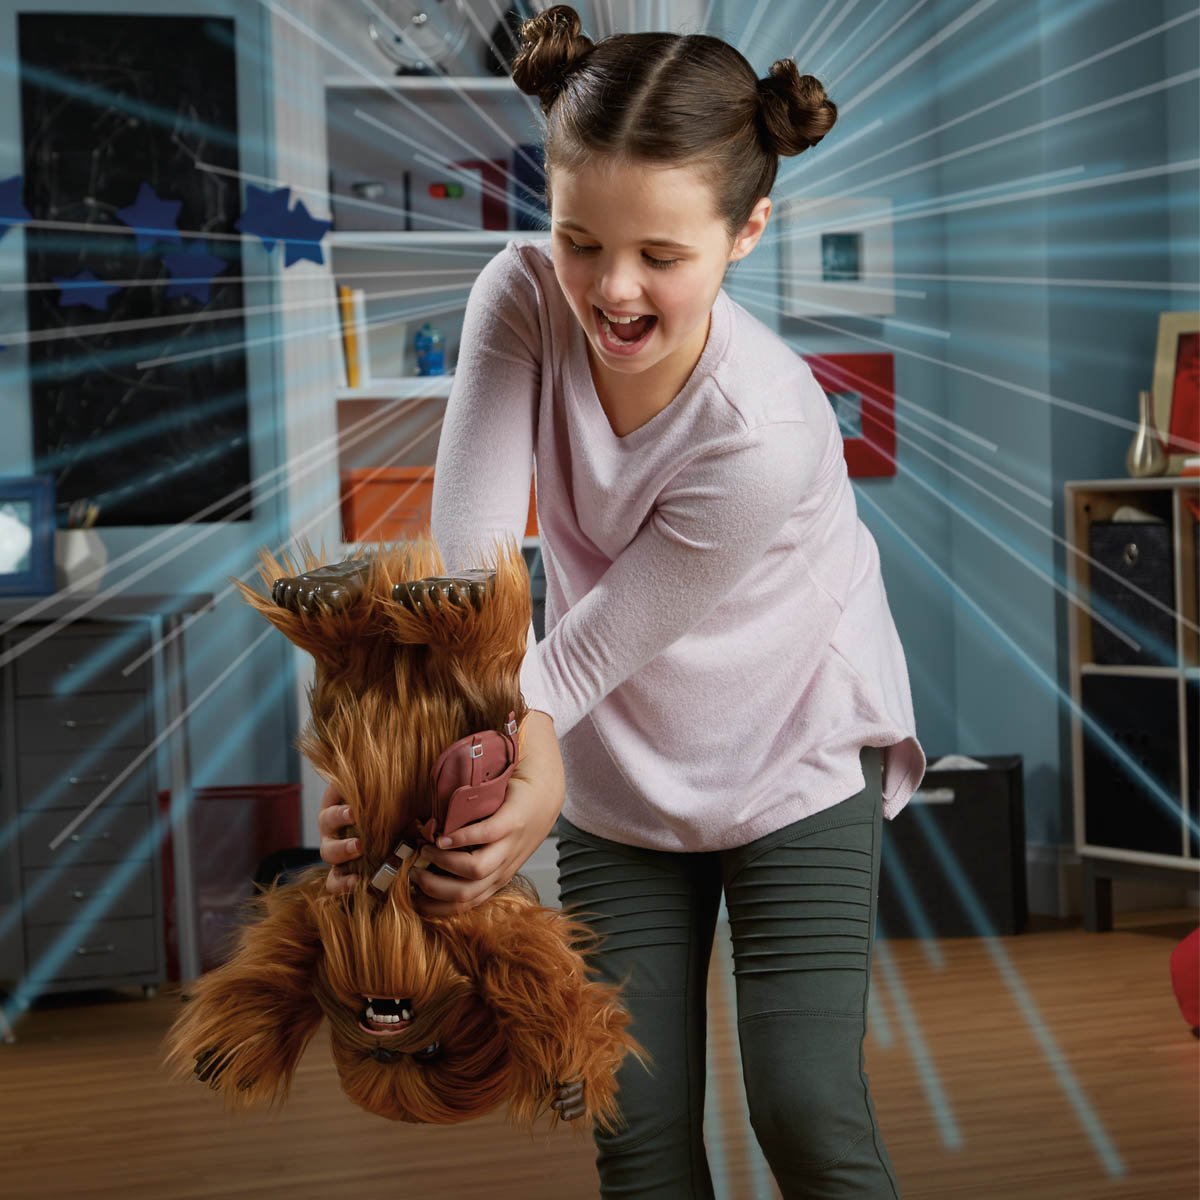 Star Wars Chewbacca Animatronic Plush Hasbro